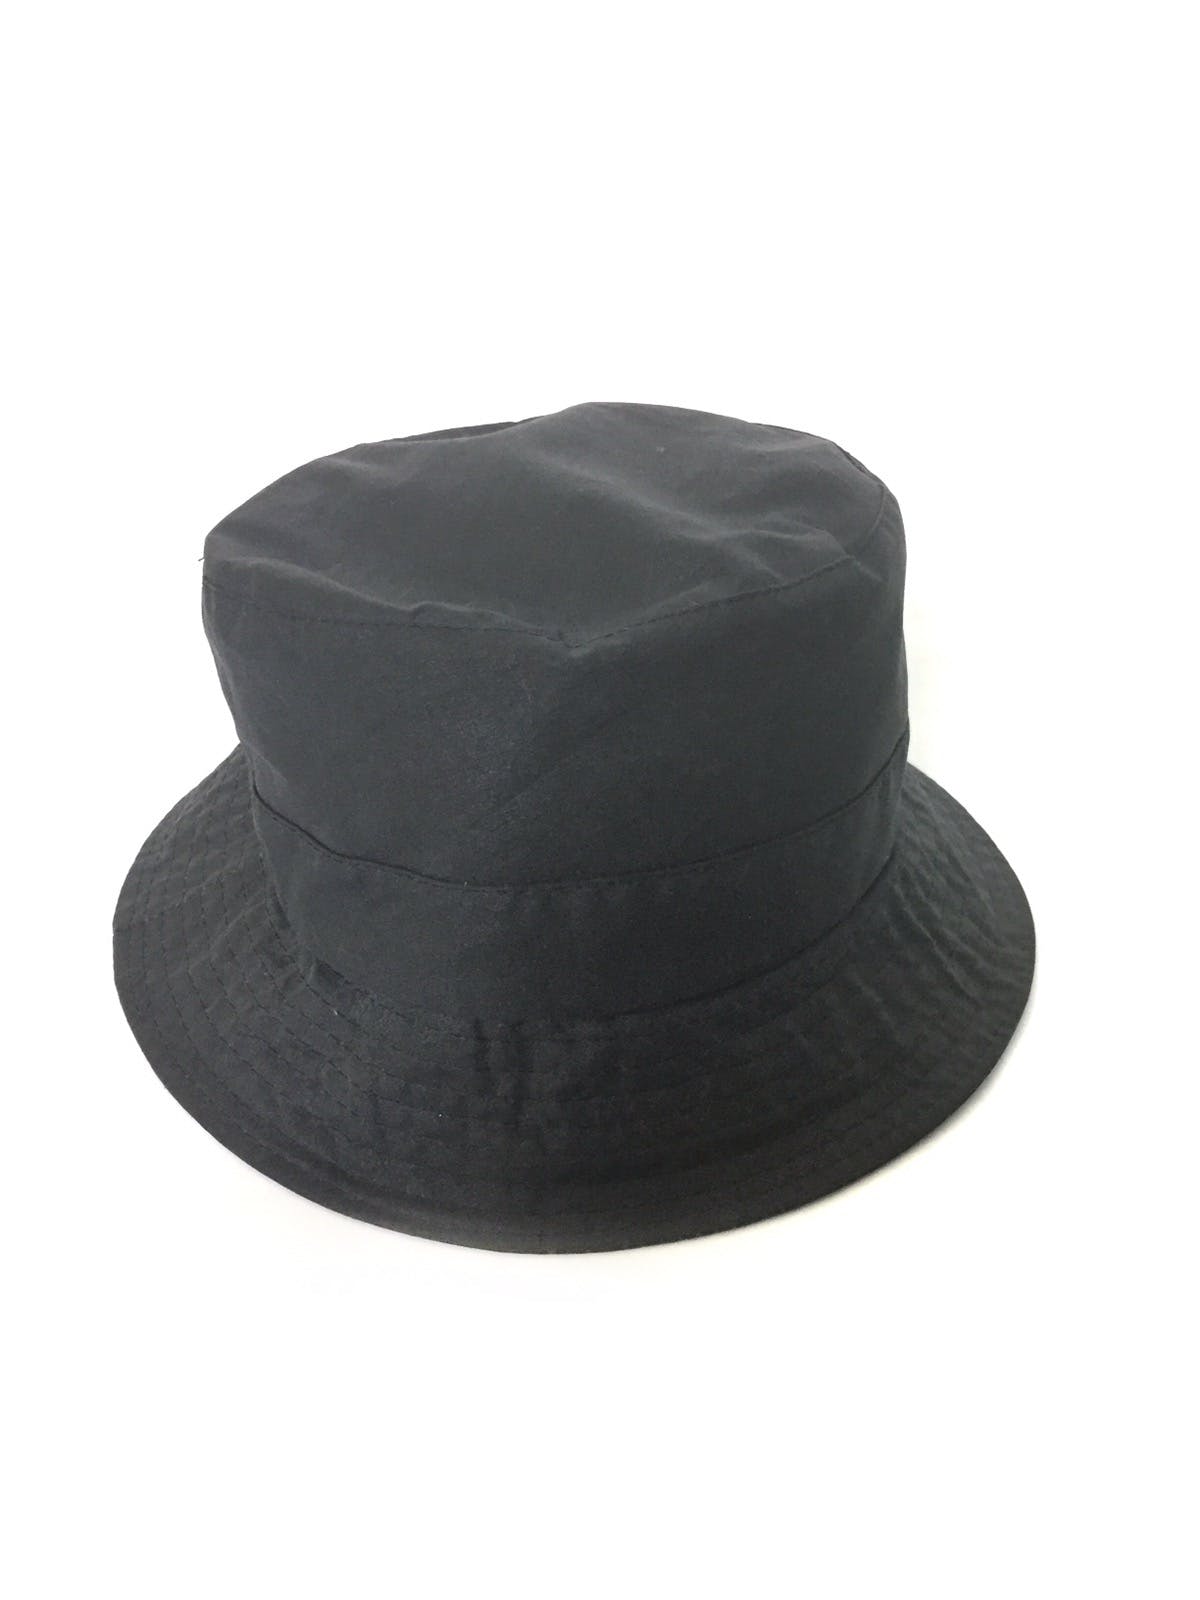 Barbour international wax bucket hat xl size - 1